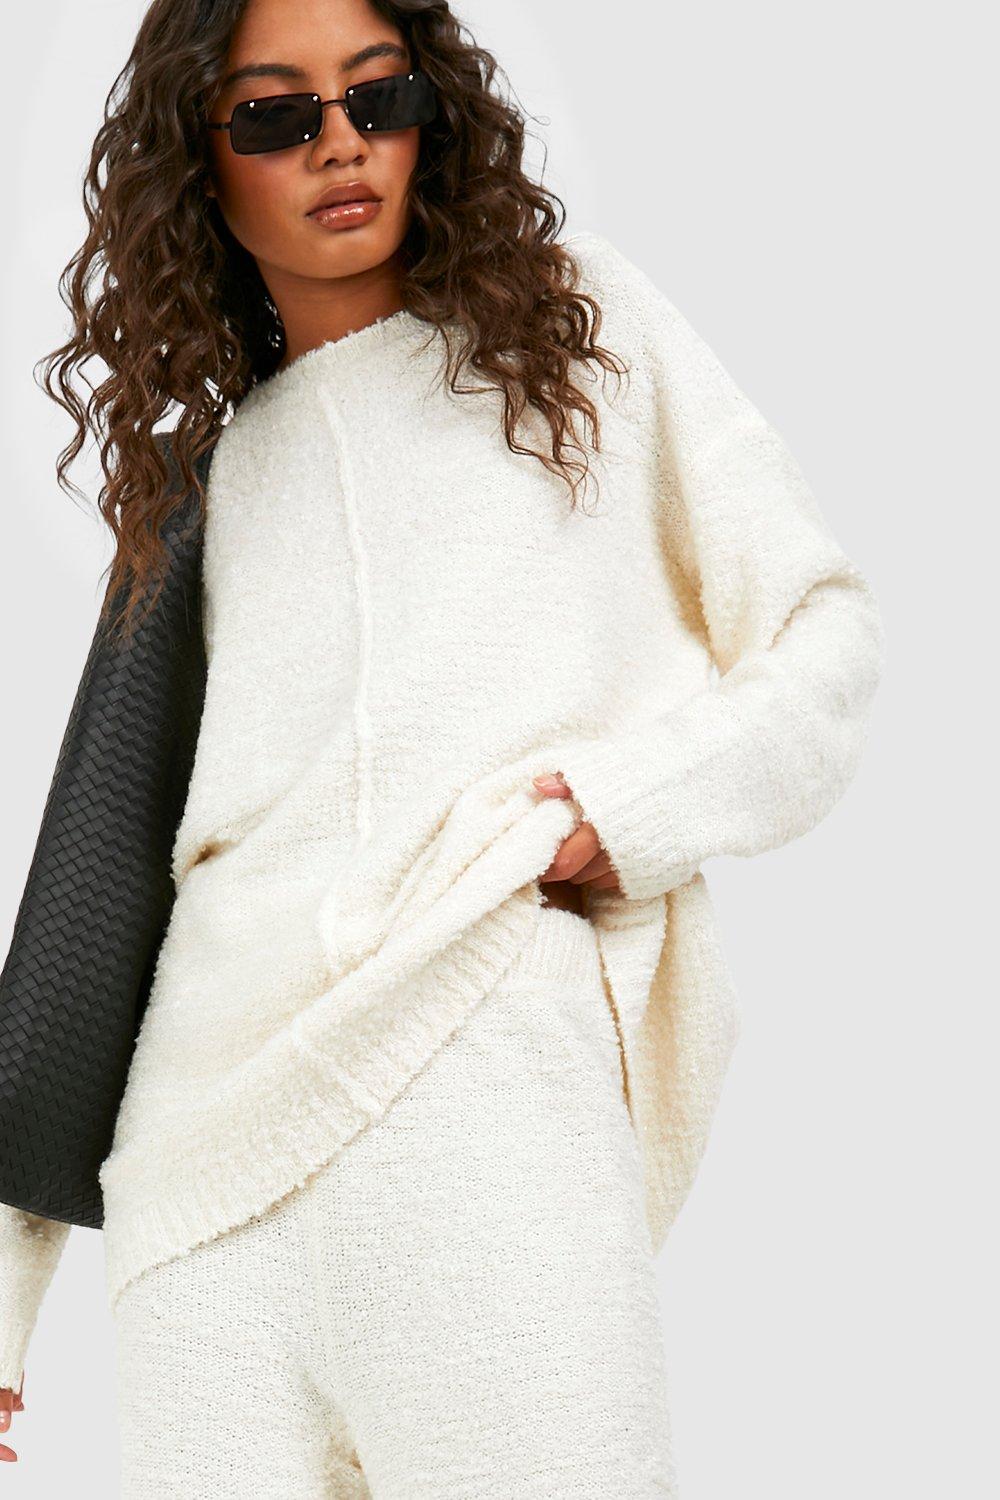 https://media.boohoo.com/i/boohoo/gzz62420_ivory_xl_3/female-ivory-tall-boucle-knit-seam-detail-oversized-sweater